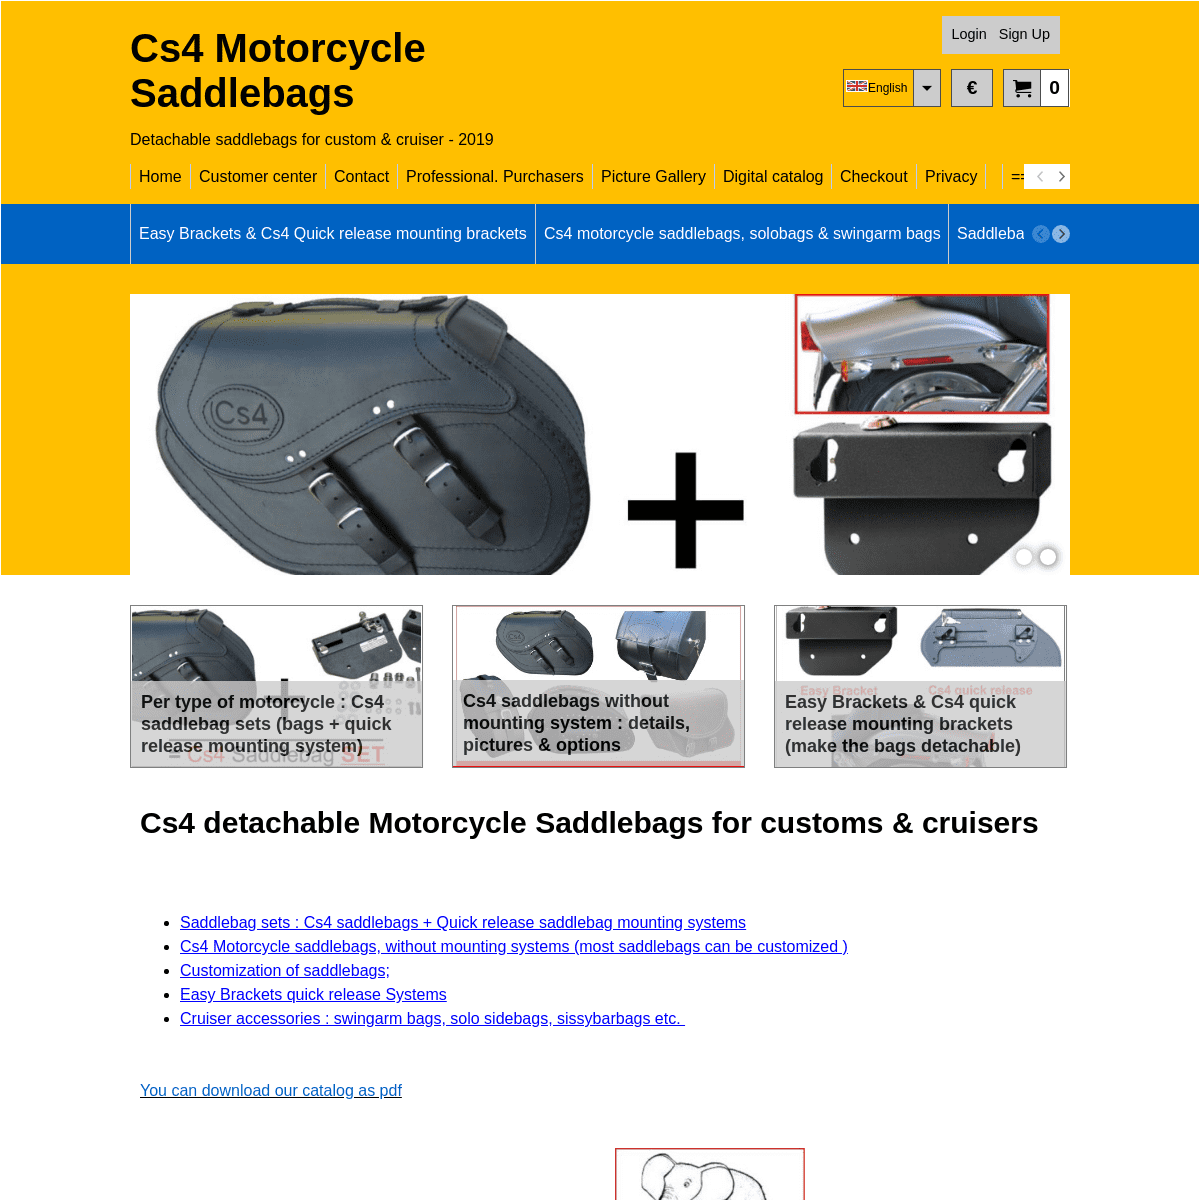 A complete backup of cs4-saddlebags.com